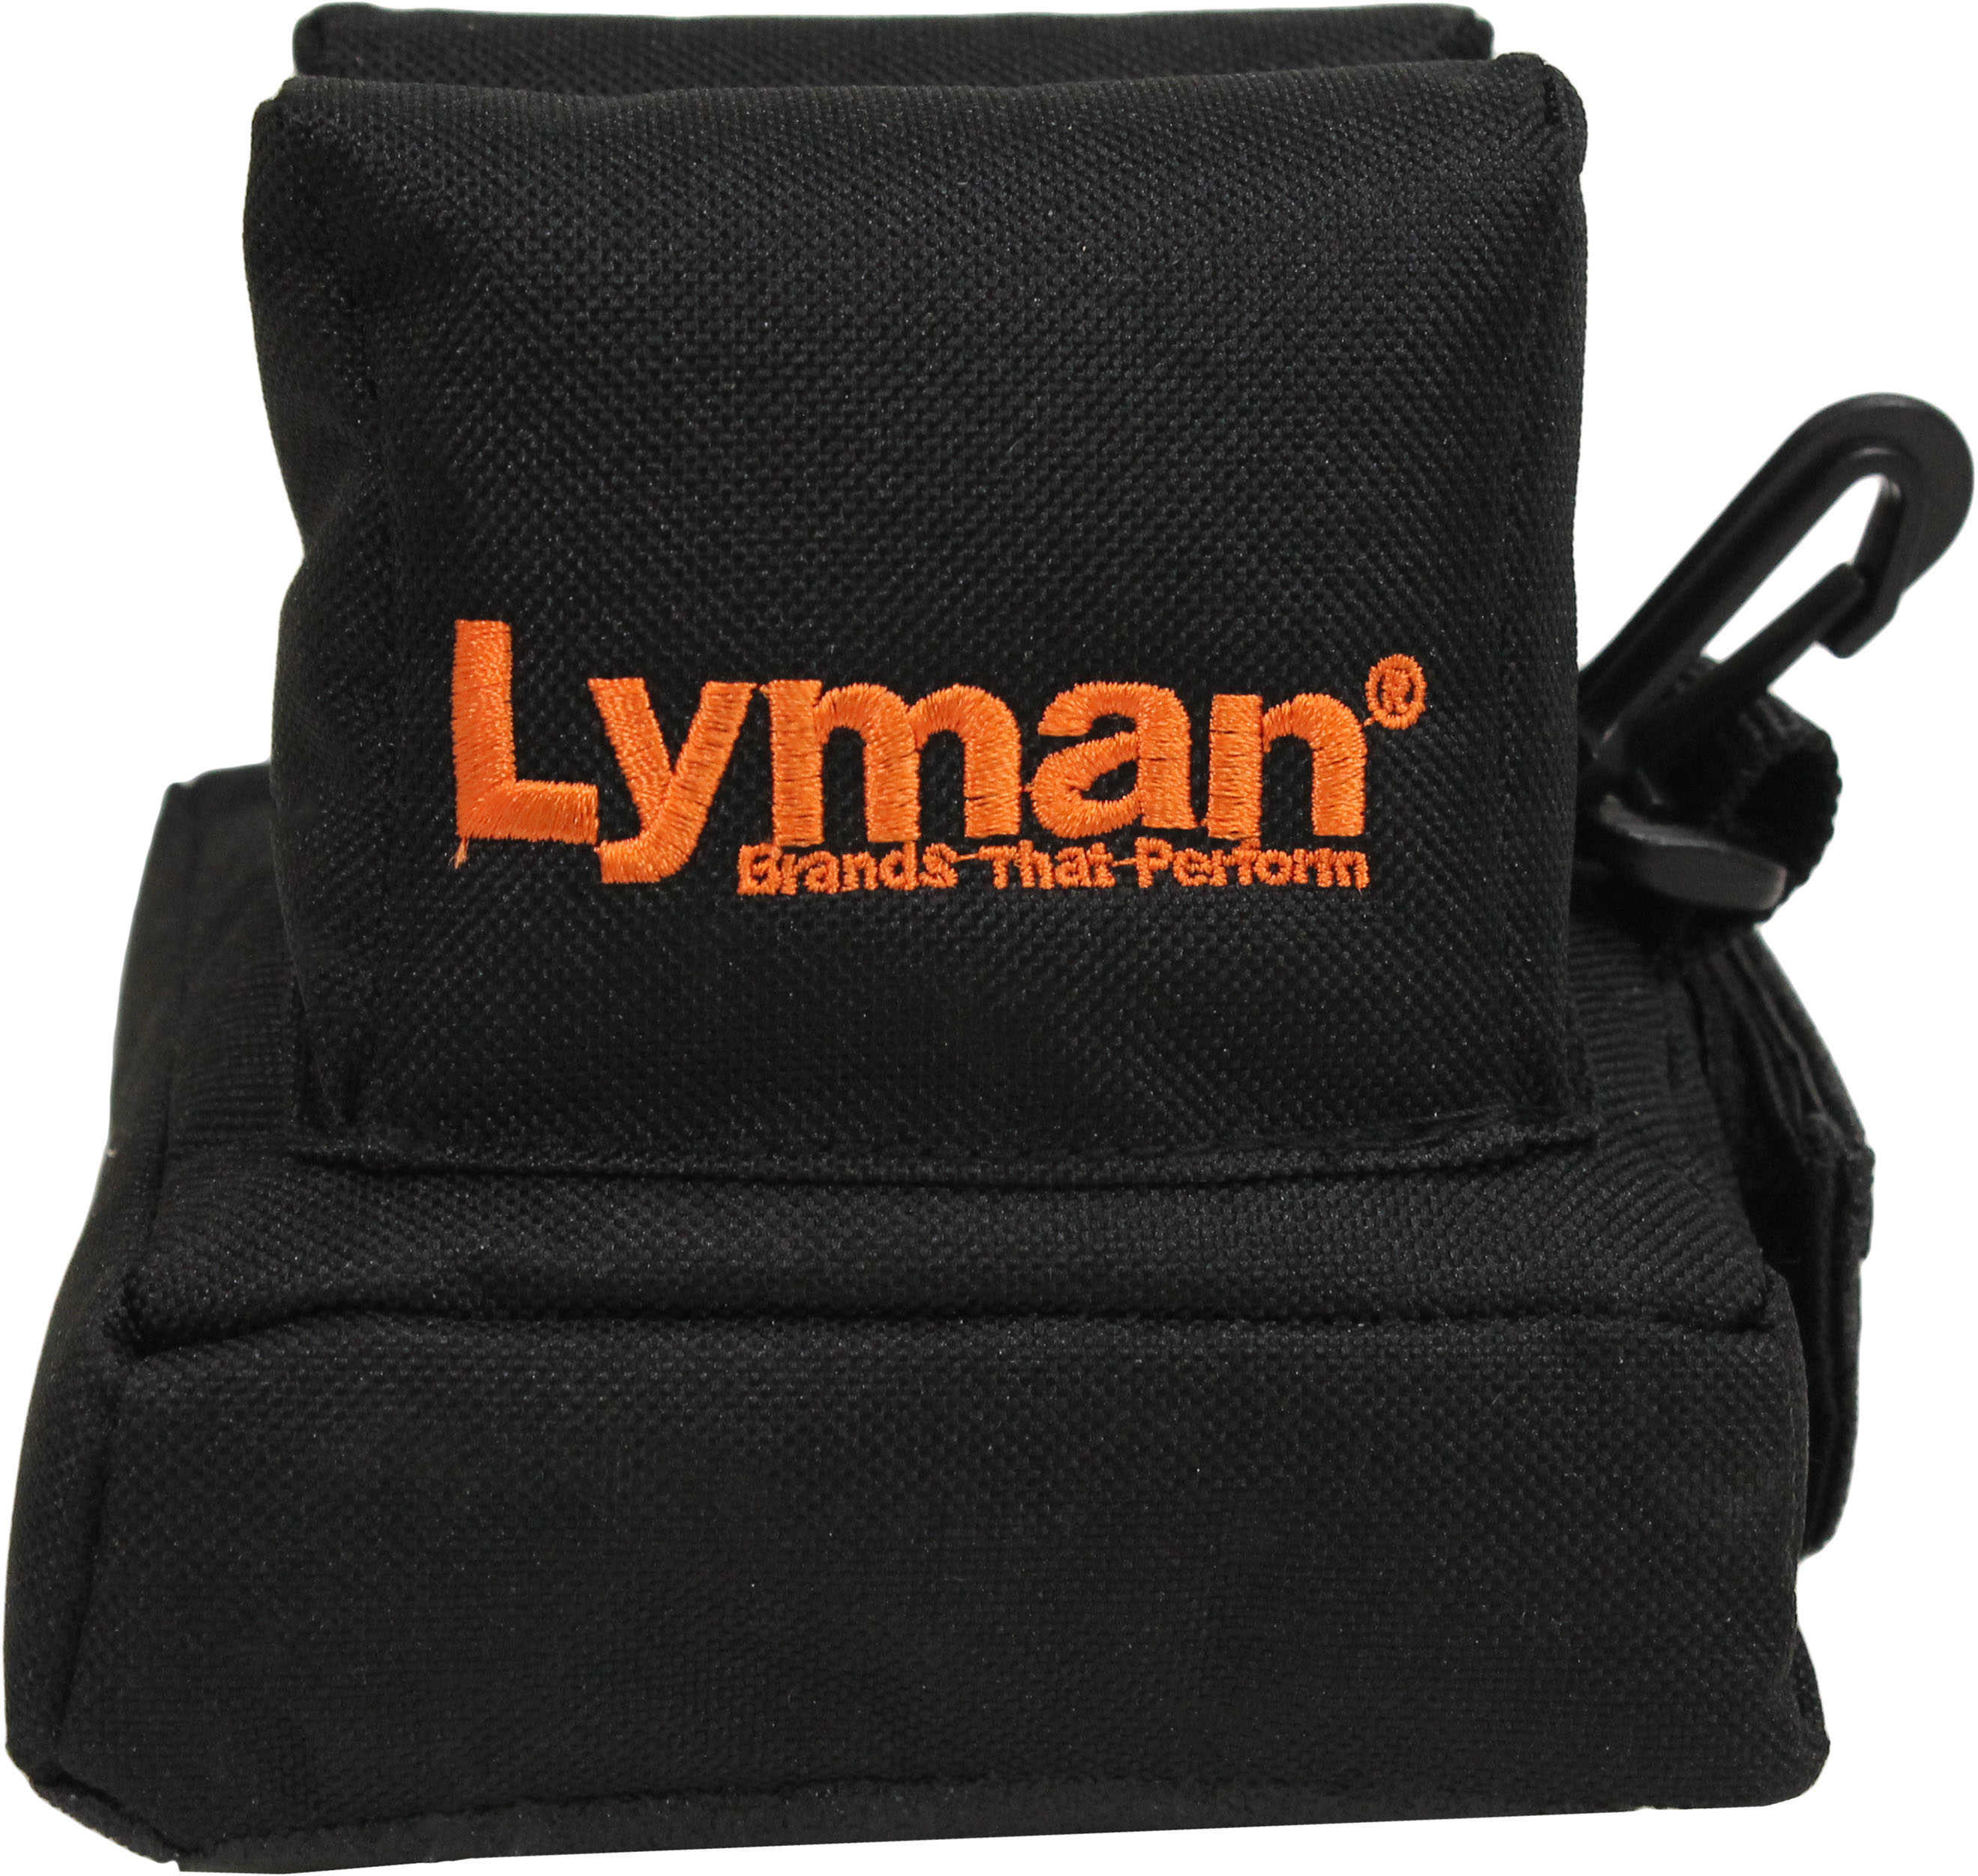 Lyman Crosshair Rear Shooting Bag Filled Black Nylon